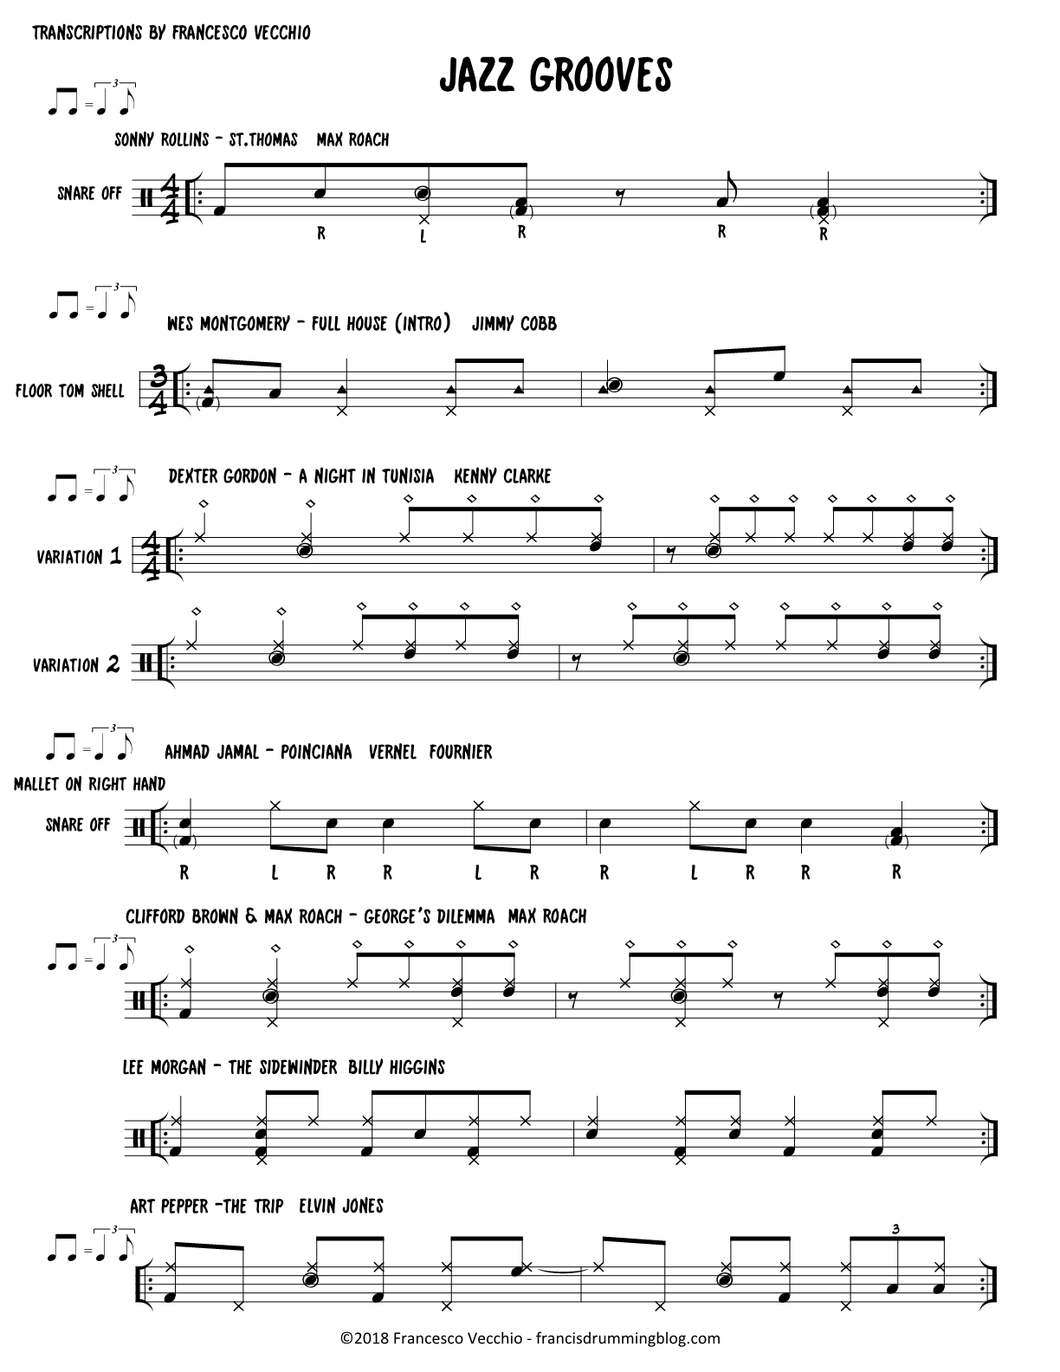 Ponciana - Ahmad Jamal - Selection Drum Transcription / Drum Sheet Music - FrancisDrummingBlog.com